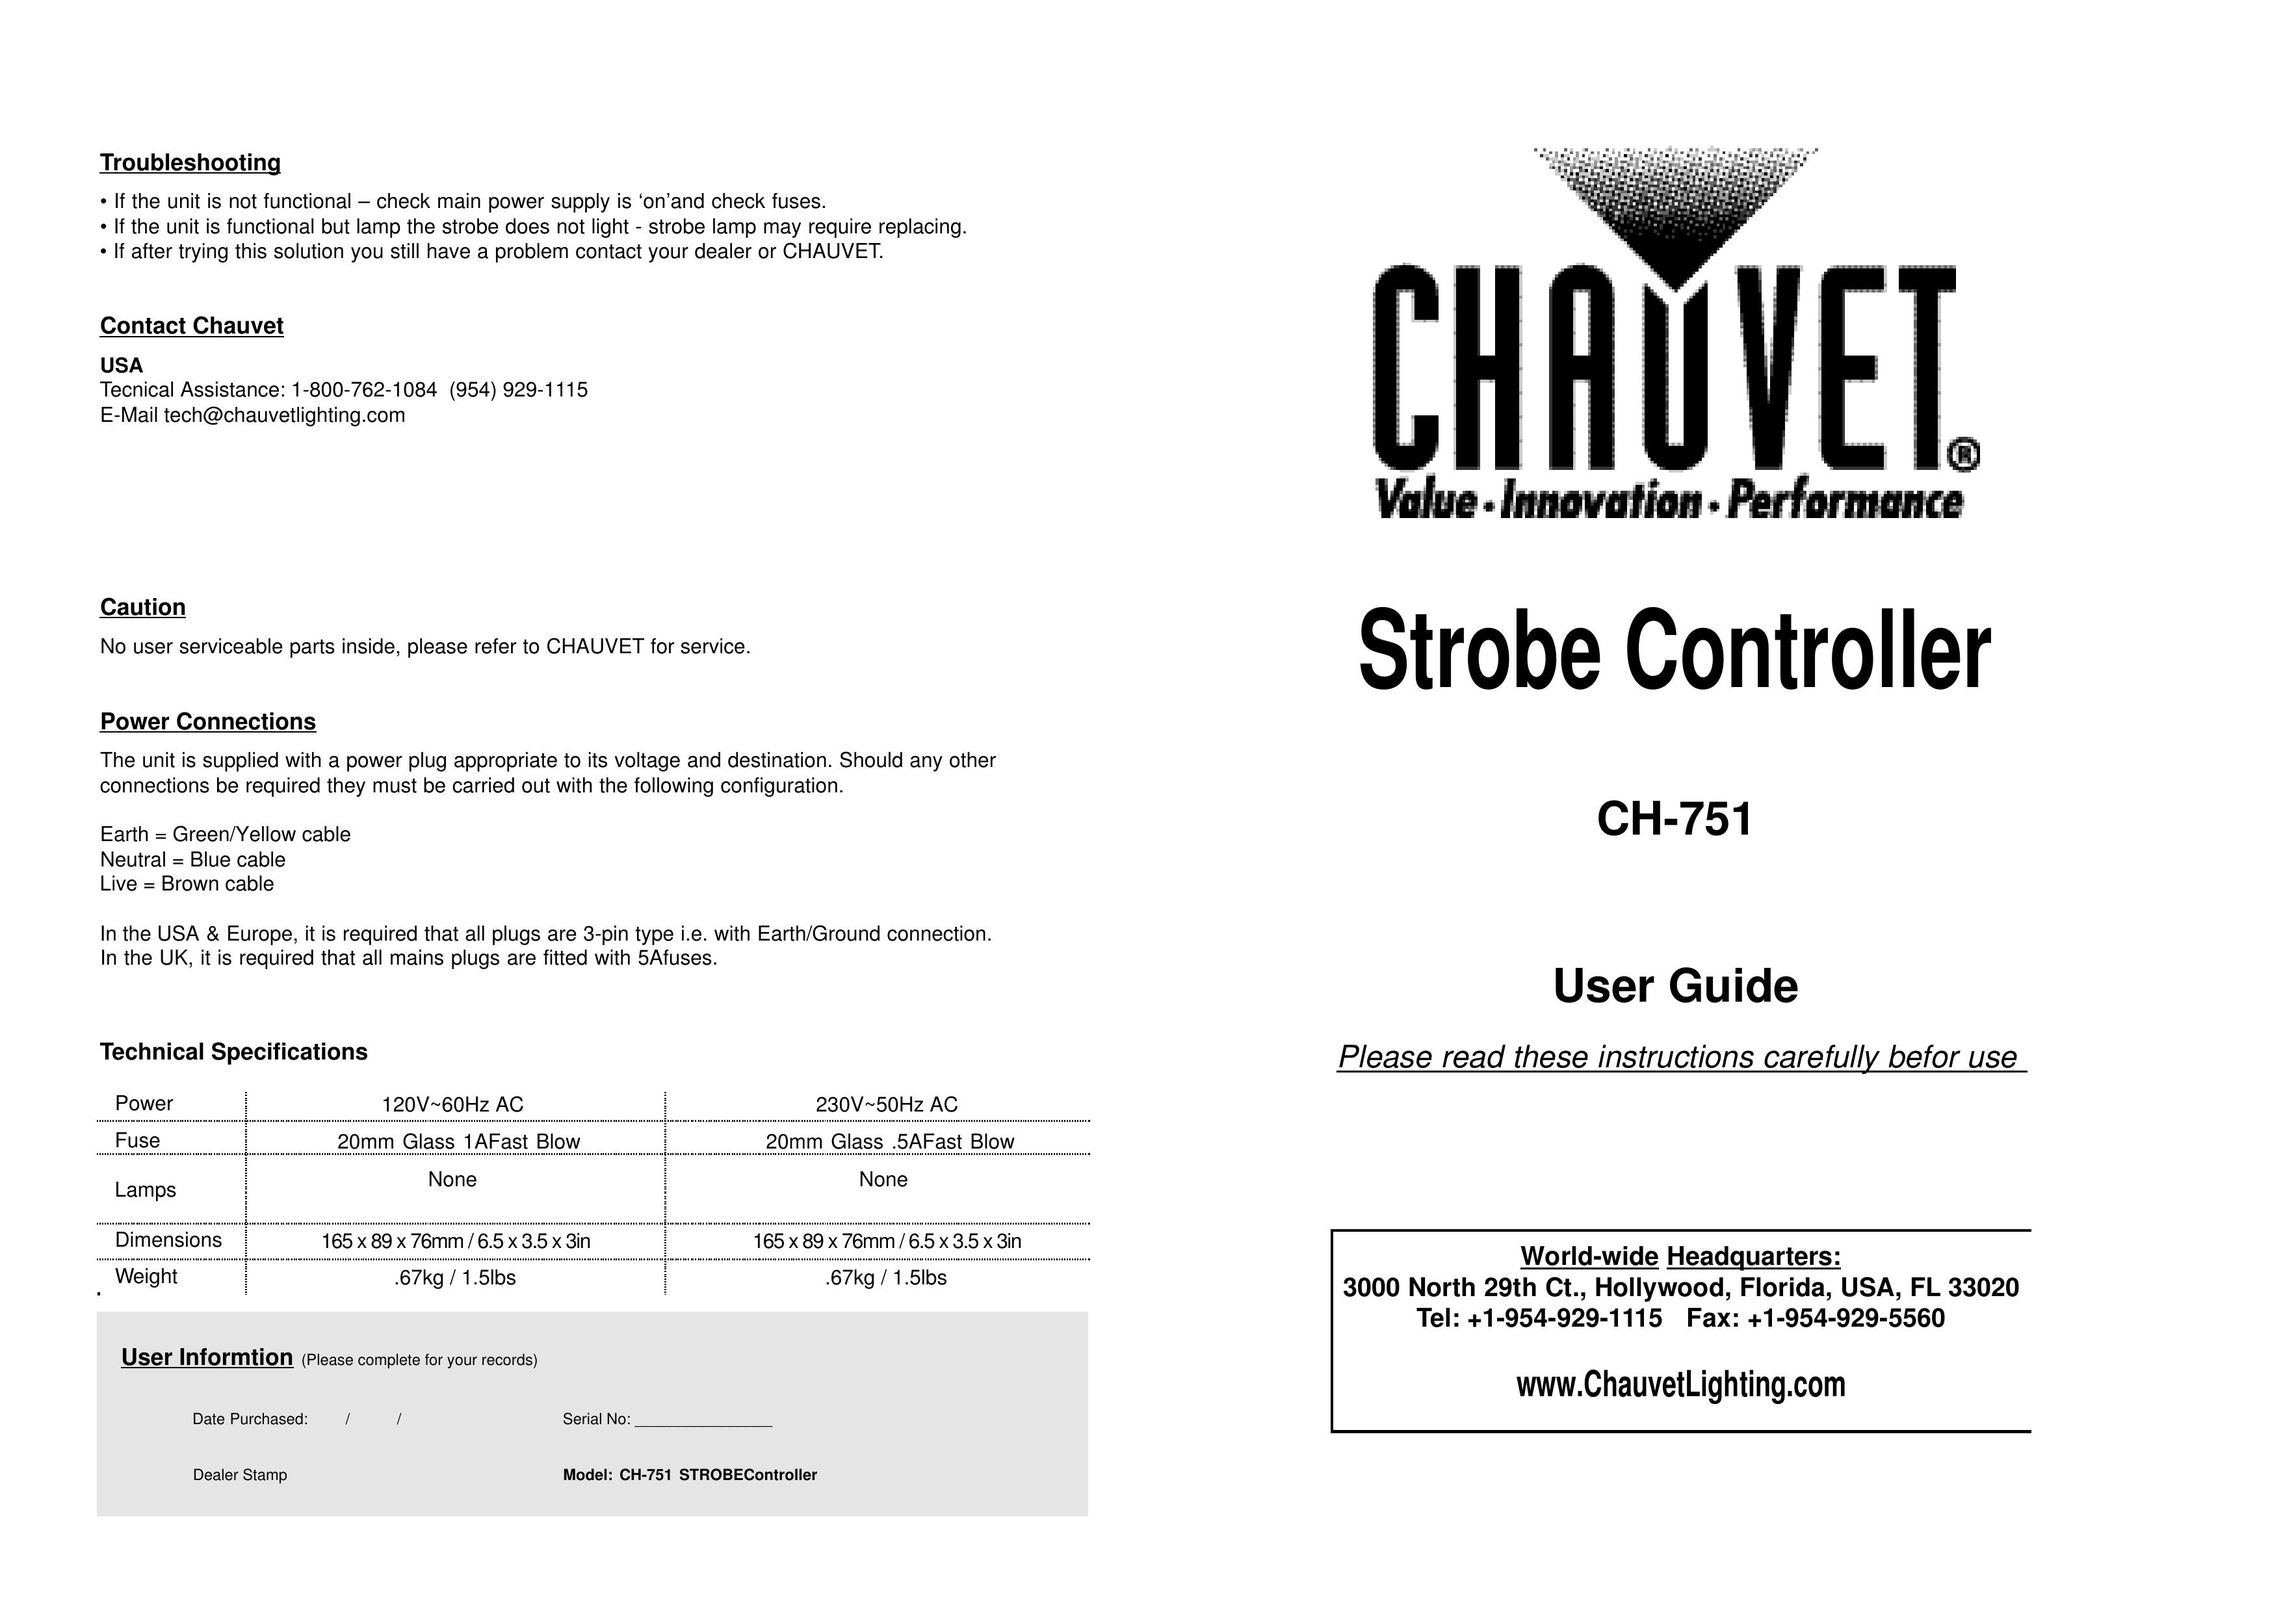 Chauvet CH-751 Stroller User Manual